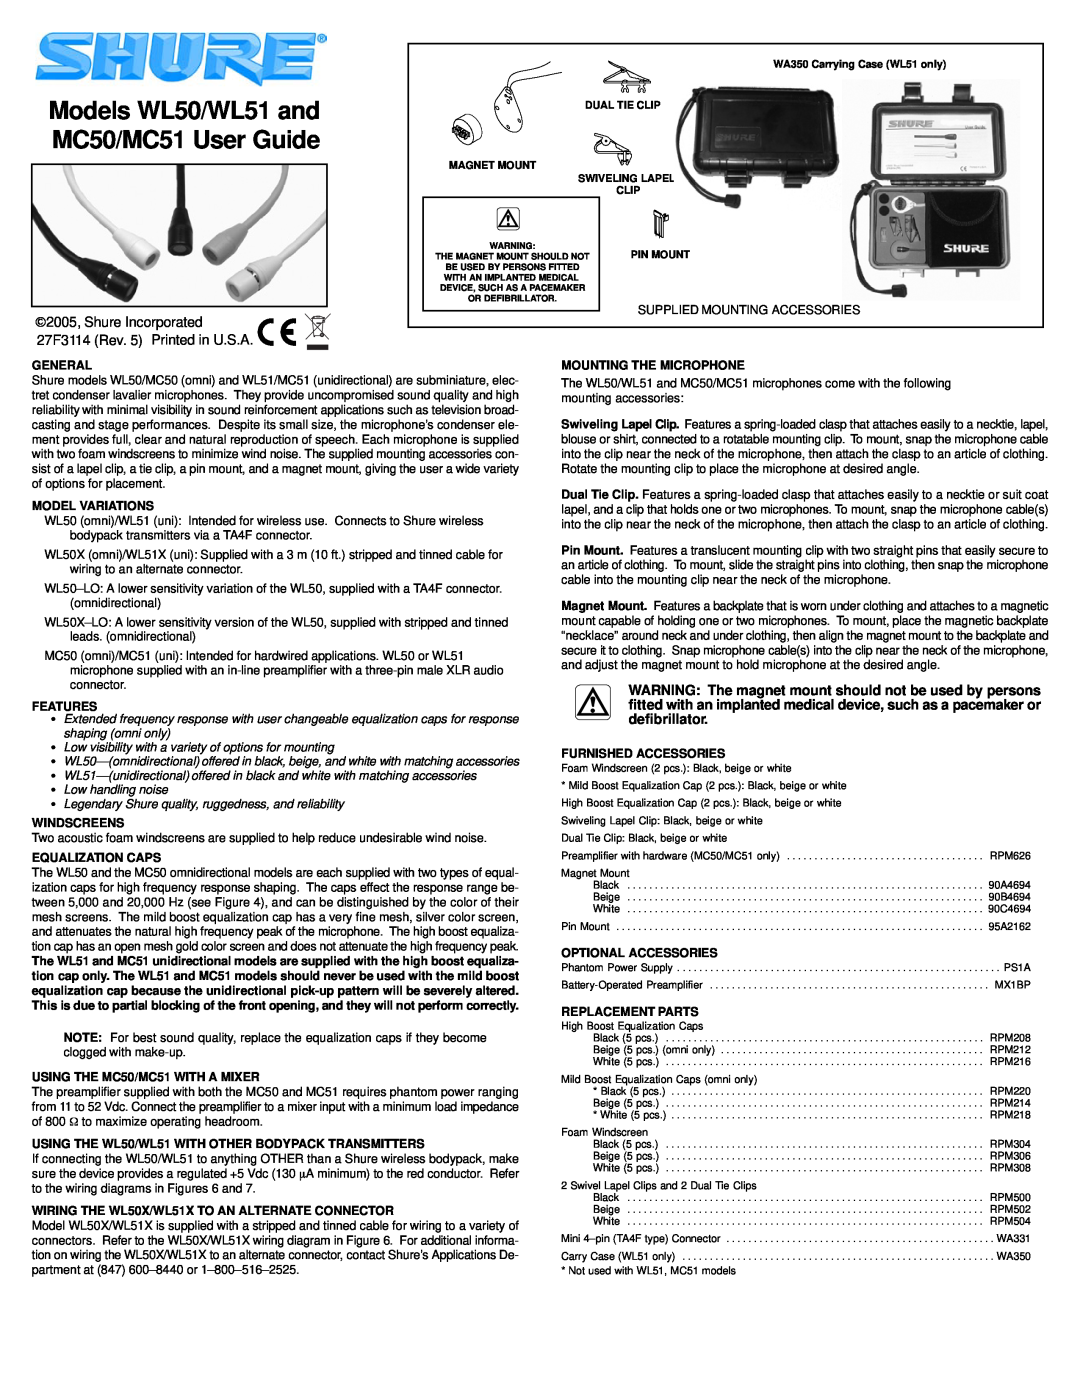 Shure manual Models WL50/WL51 and MC50/MC51 User Guide, 2005, Shure Incorporated 27F3114 Rev. 5 Printed in U.S.A 